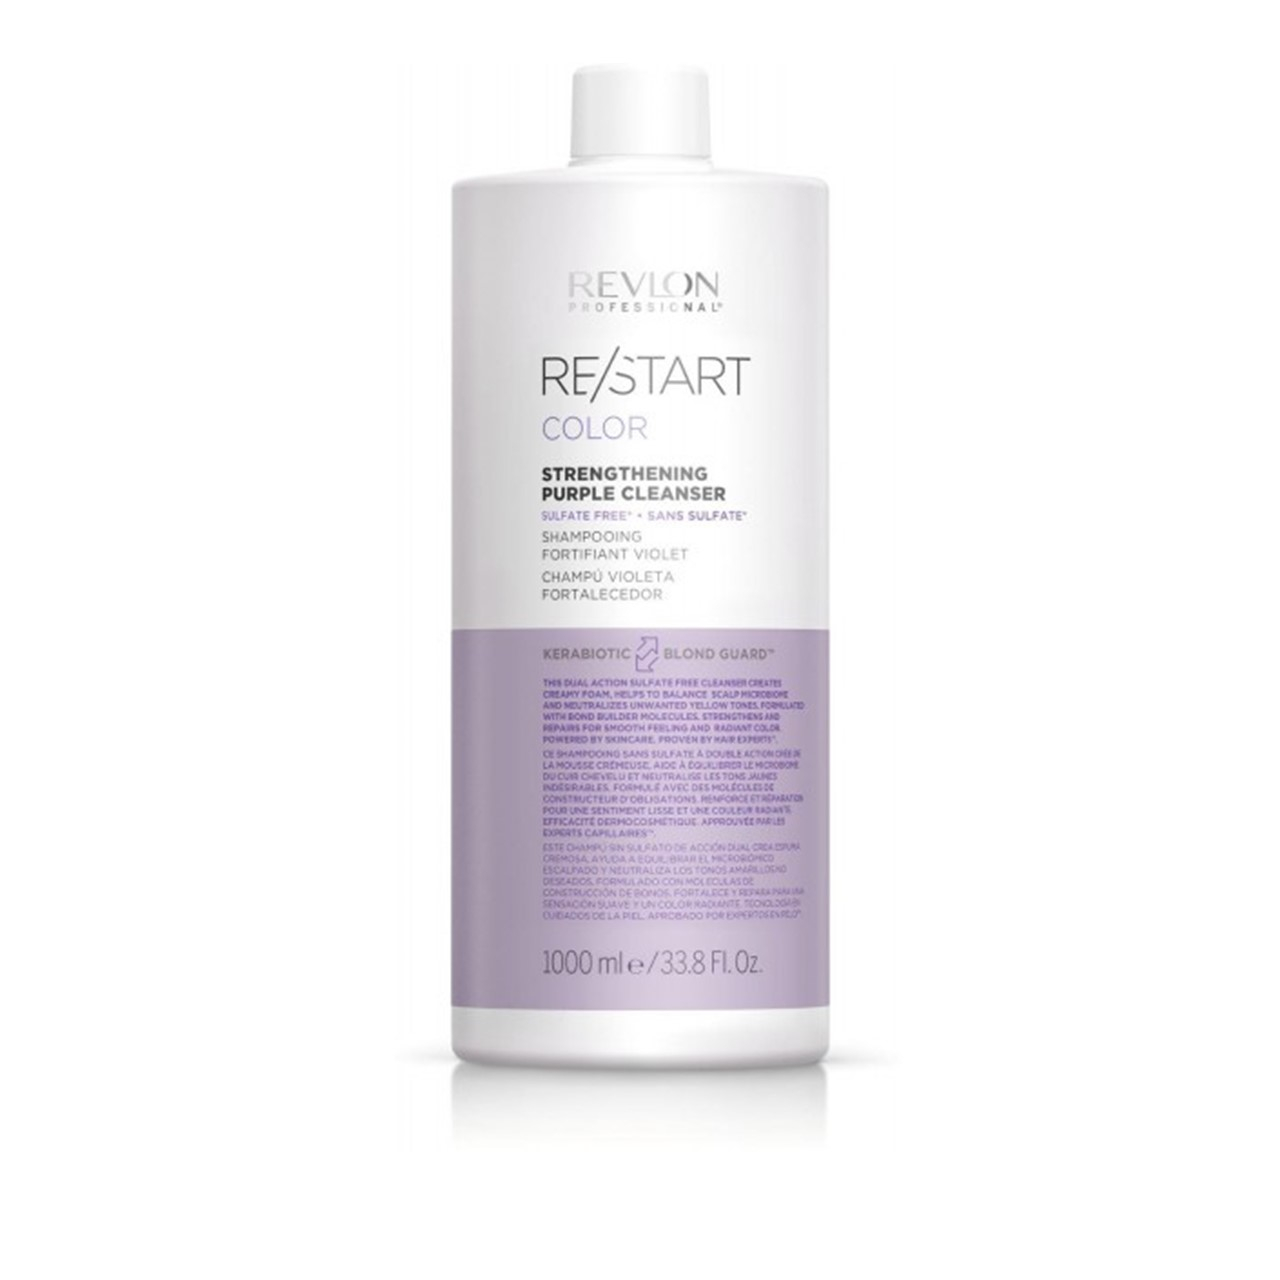 Buy Revlon Color Re/Start Strengthening Professional USA Purple Cleanser Shampoo ·